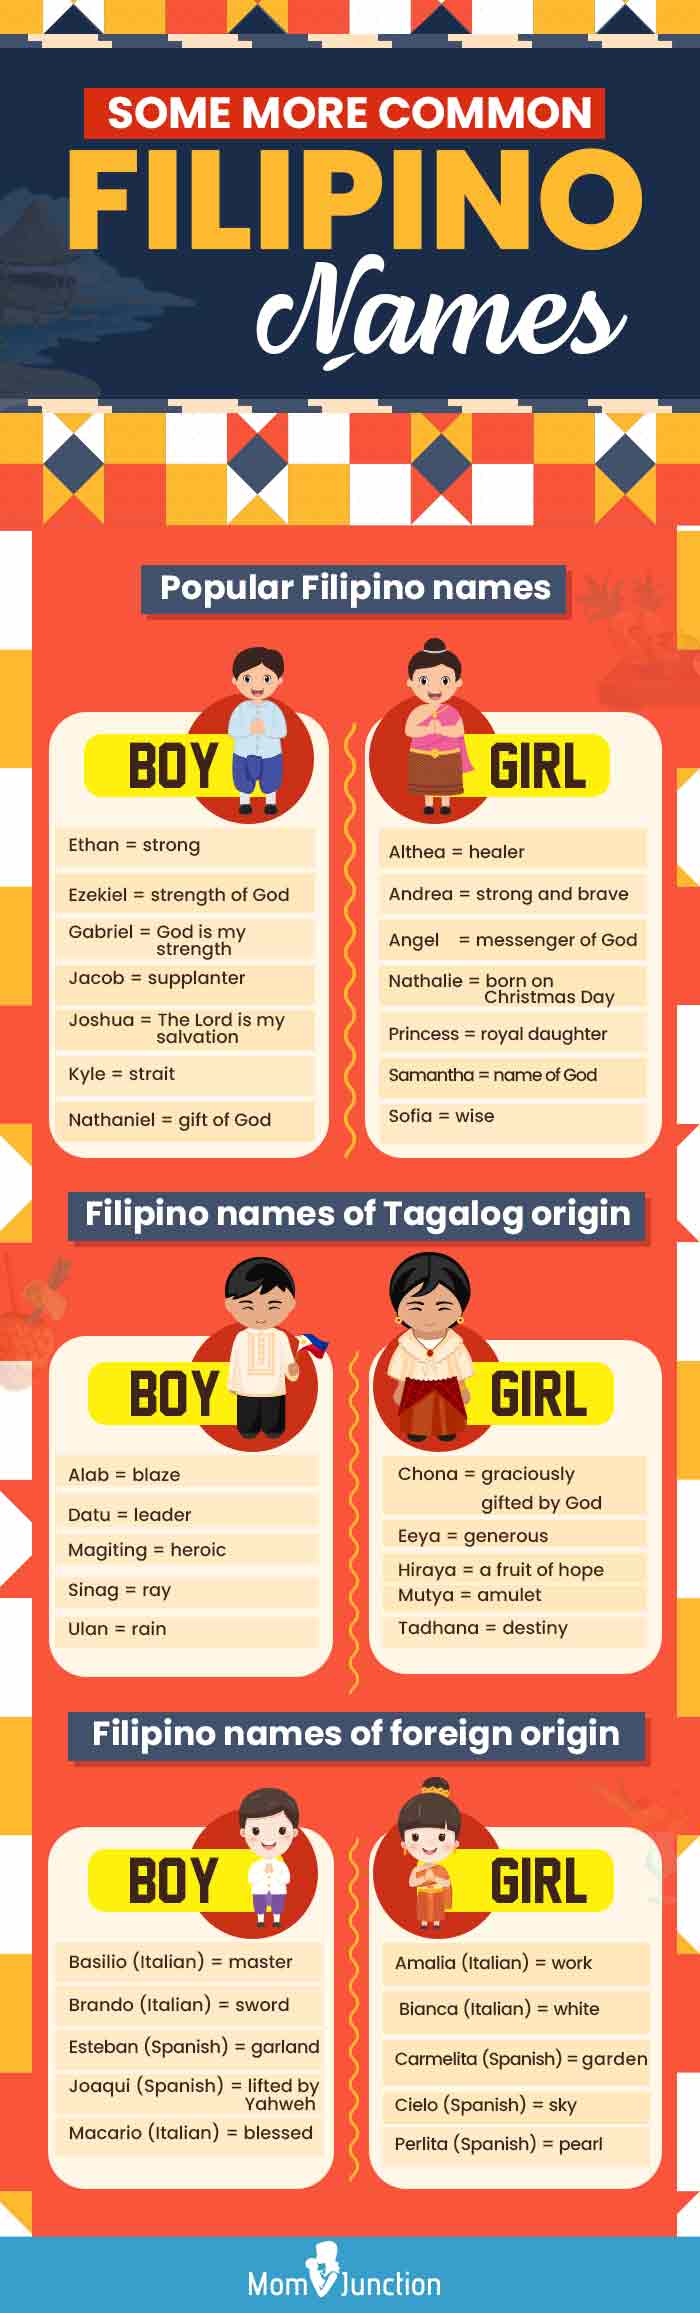 more common filipino names (infographic)